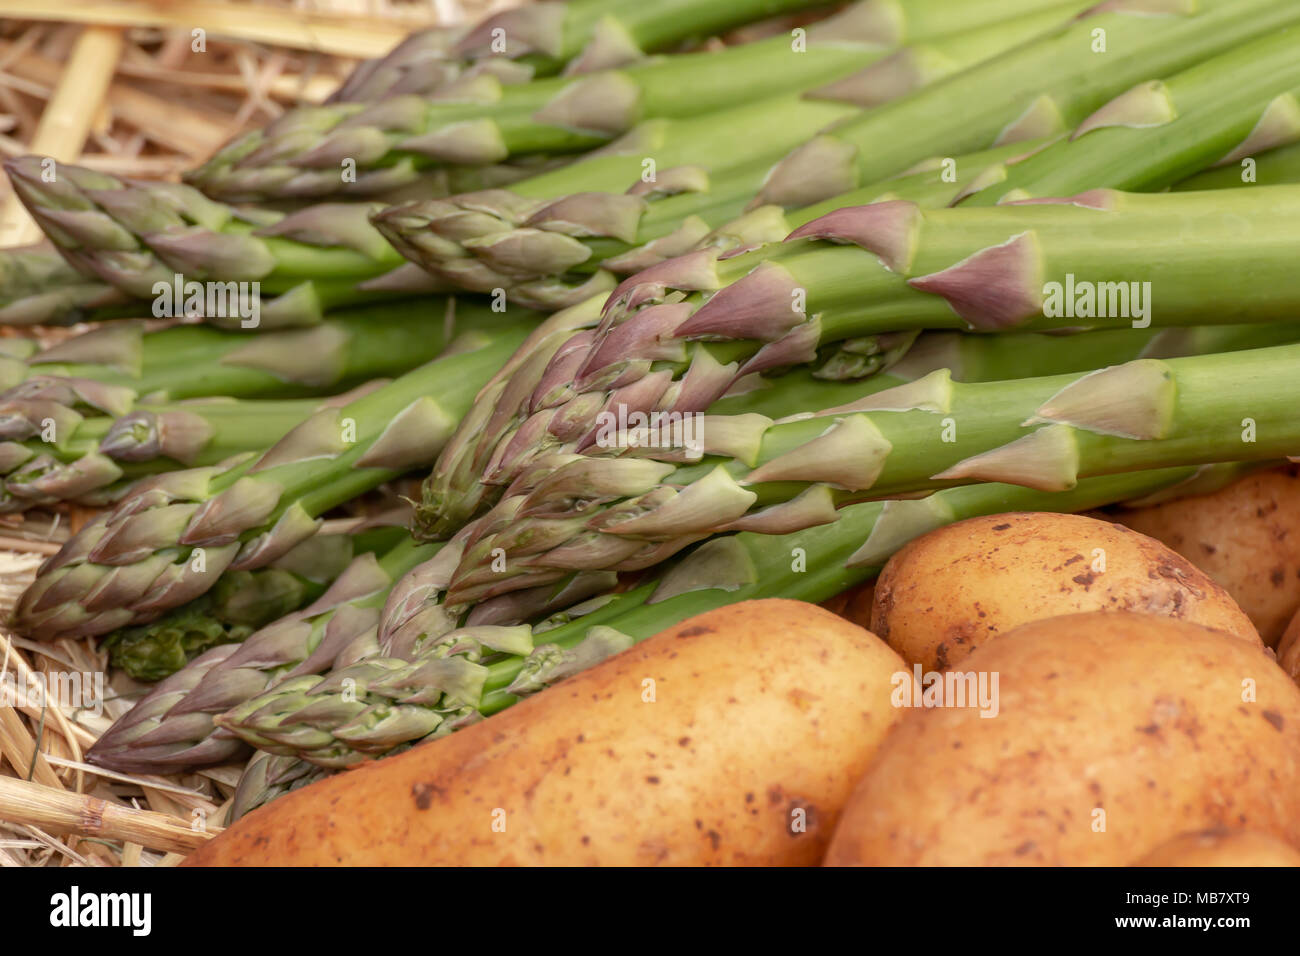 Fresh raw organic green asparagus and potatoes on straw background. Asparagus officinalis, Solanum tuberosum Stock Photo